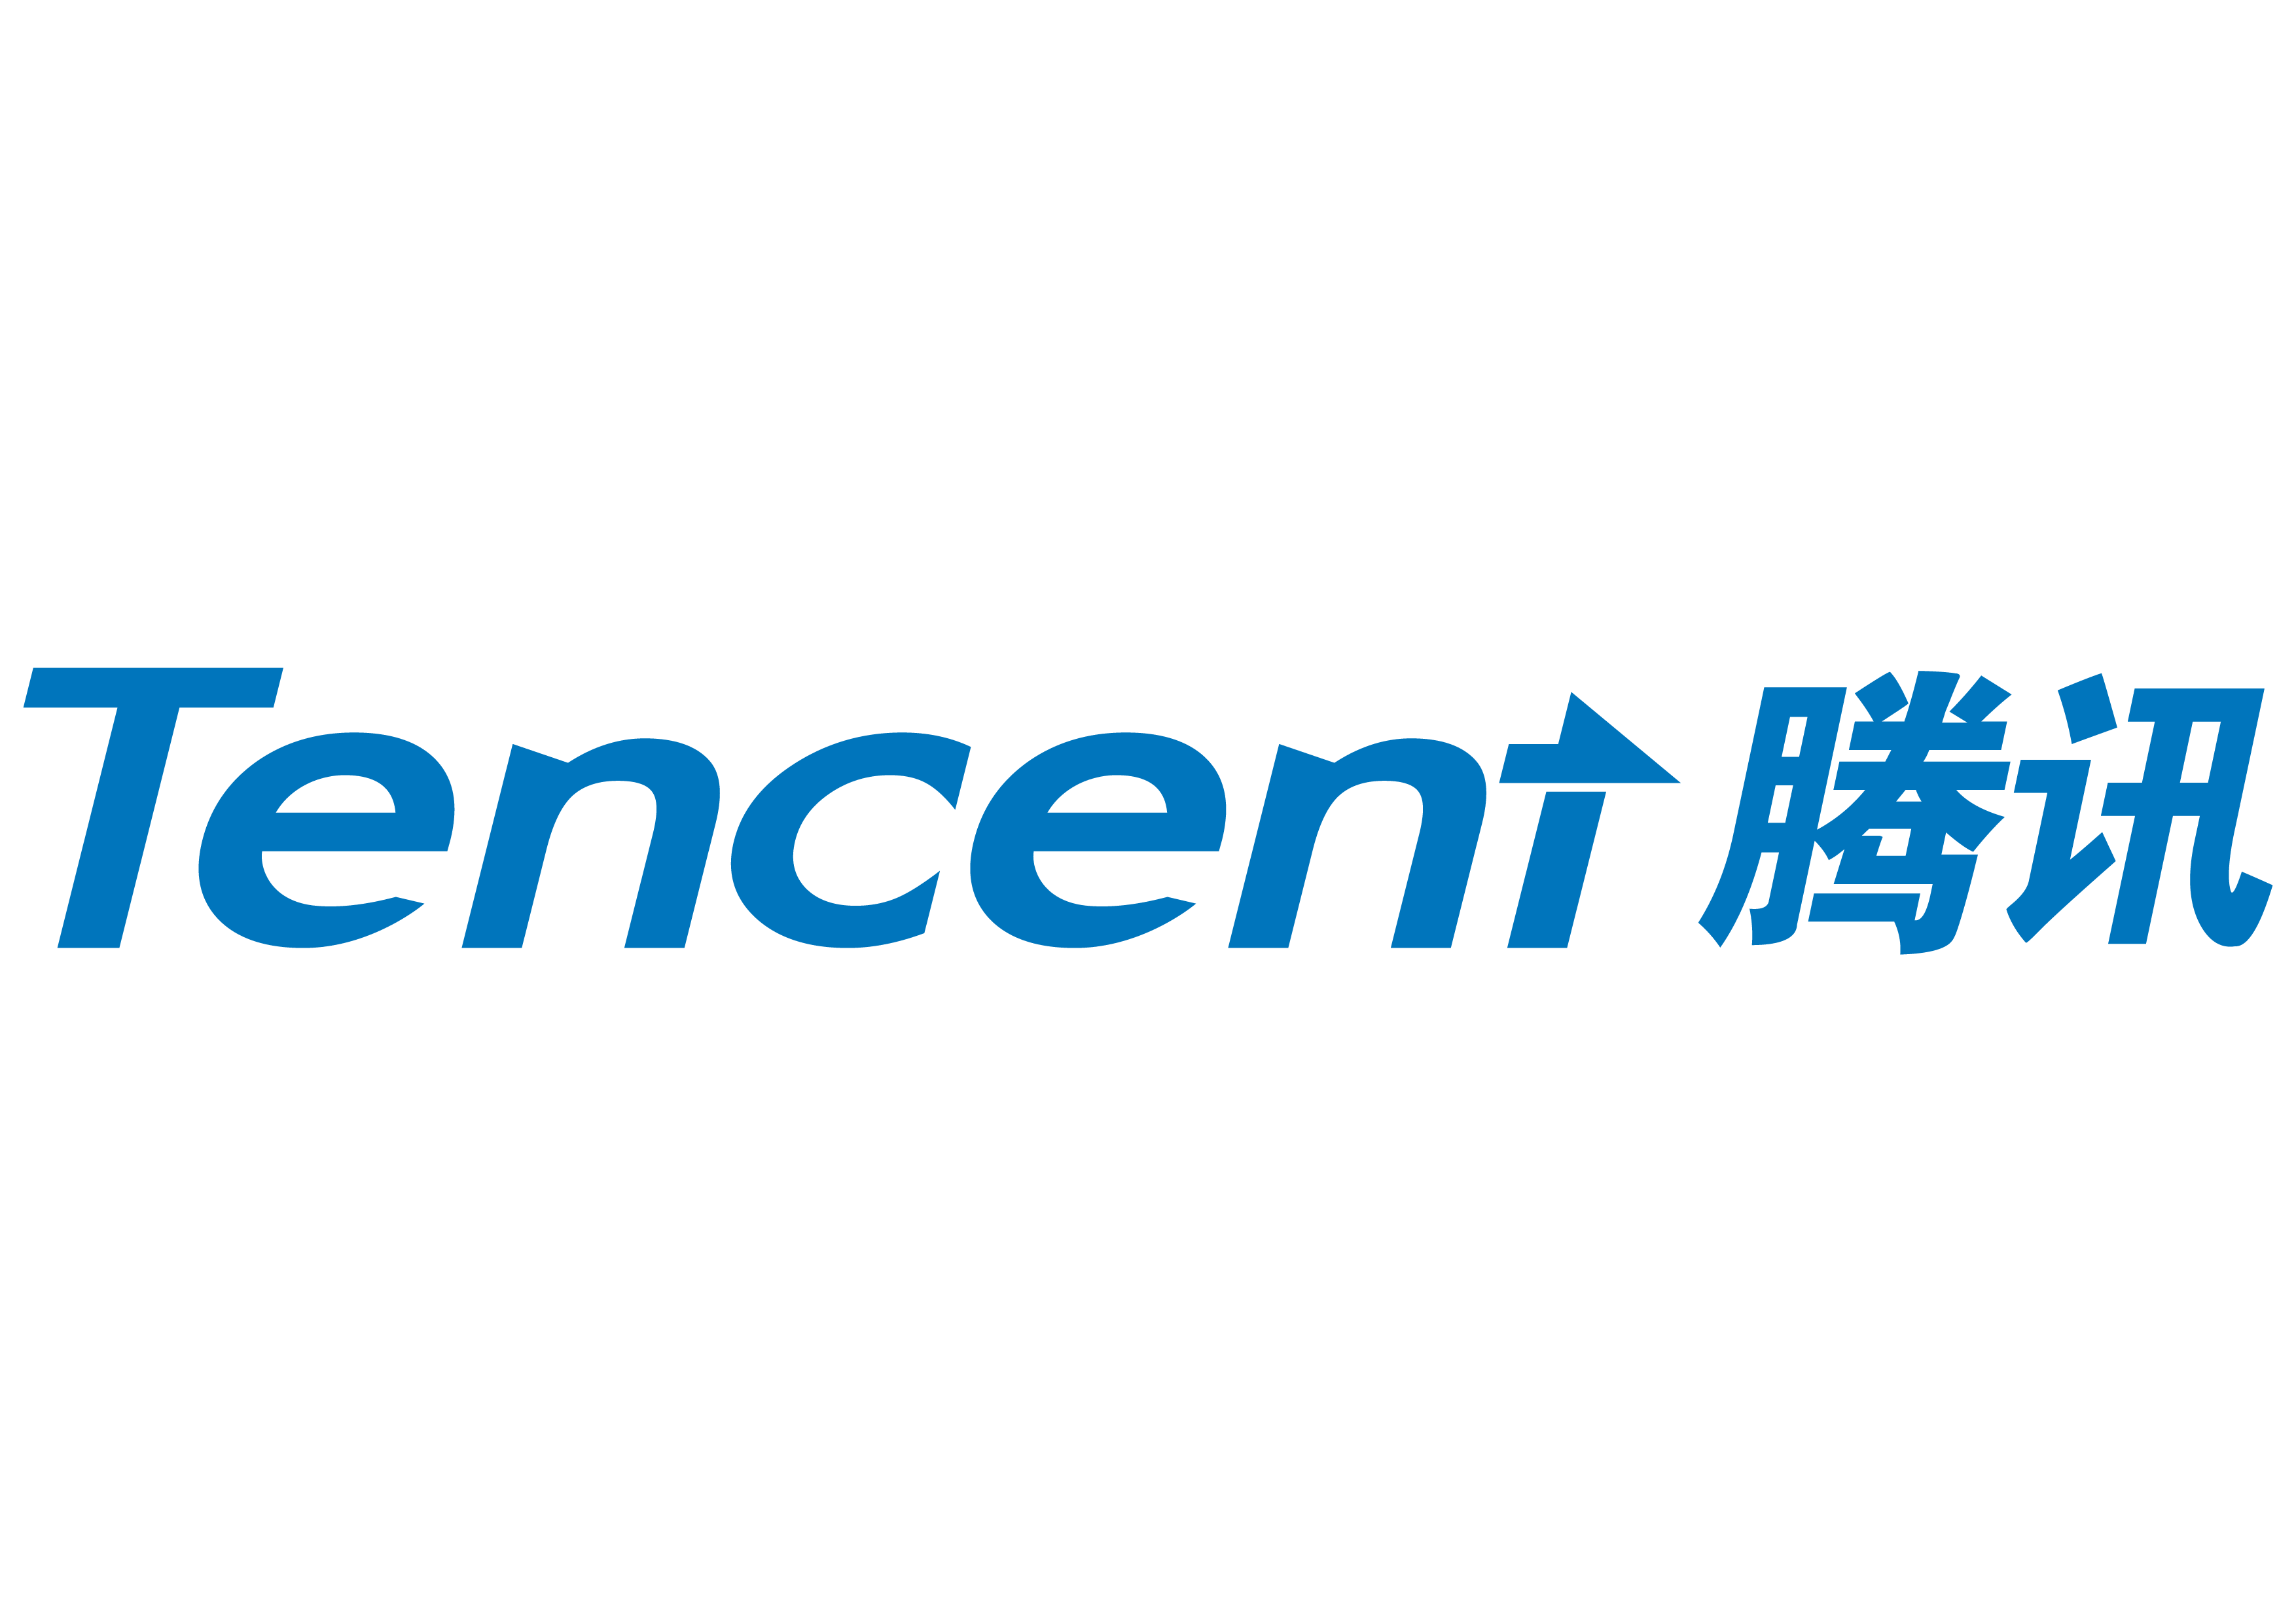 QQ Tencent logo